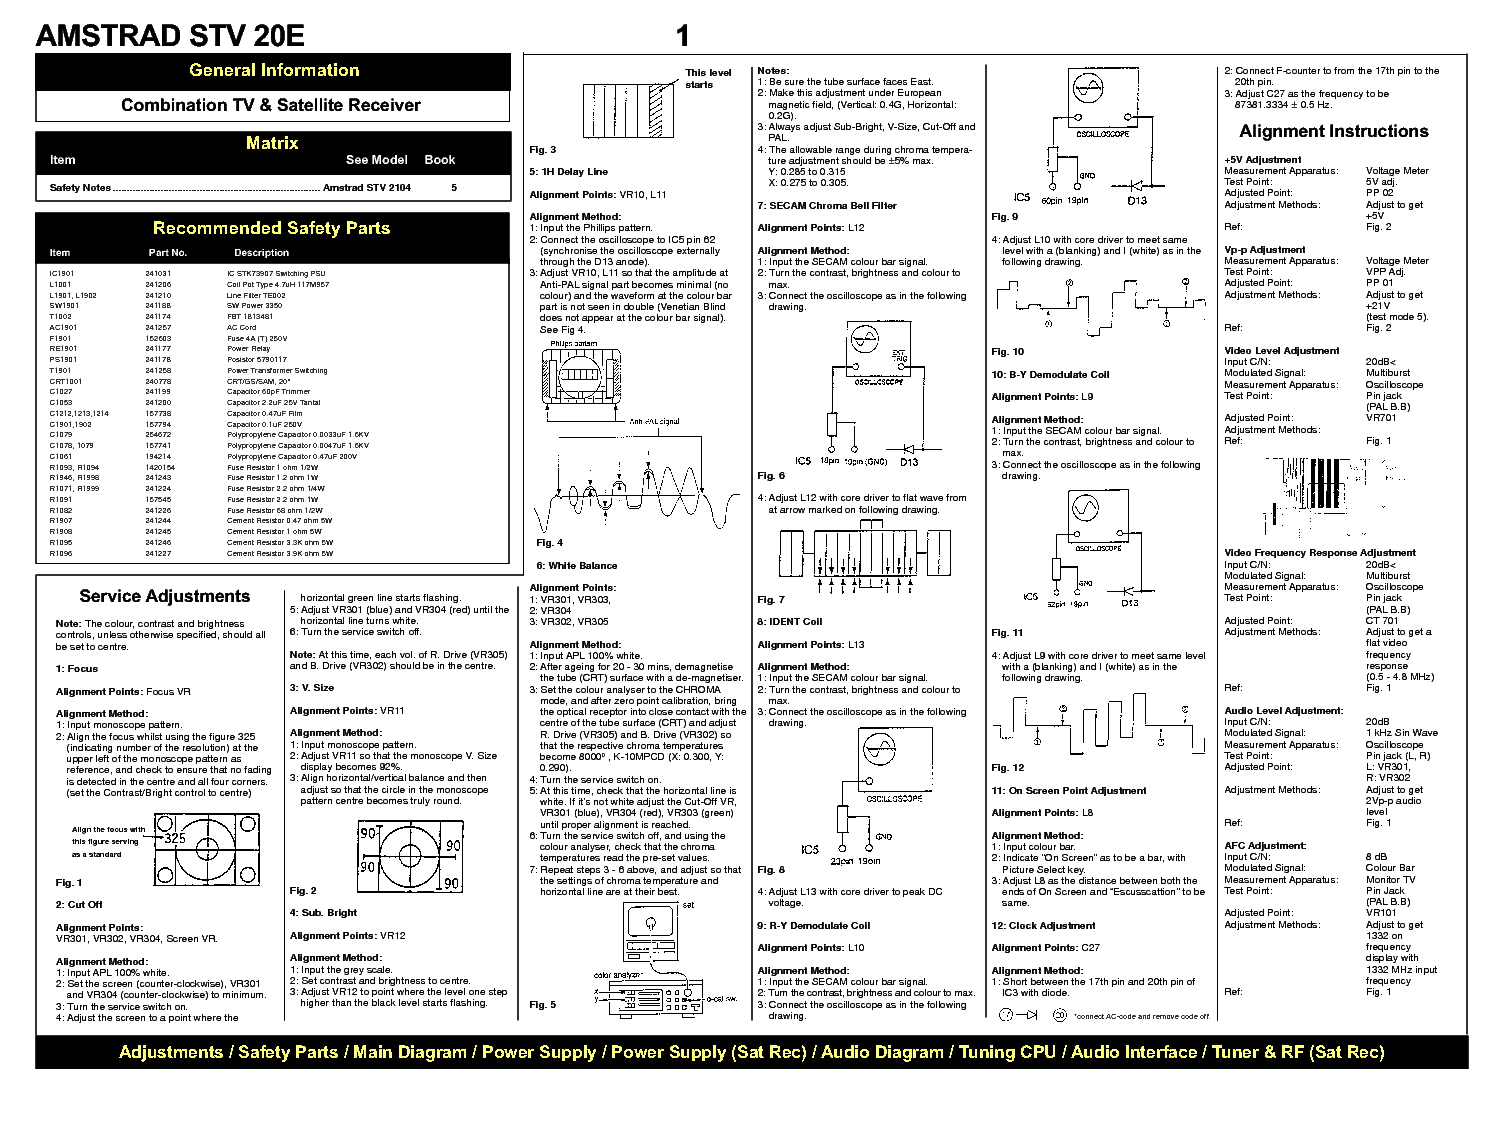 AMSTRAD TV STV-20E service manual (1st page)